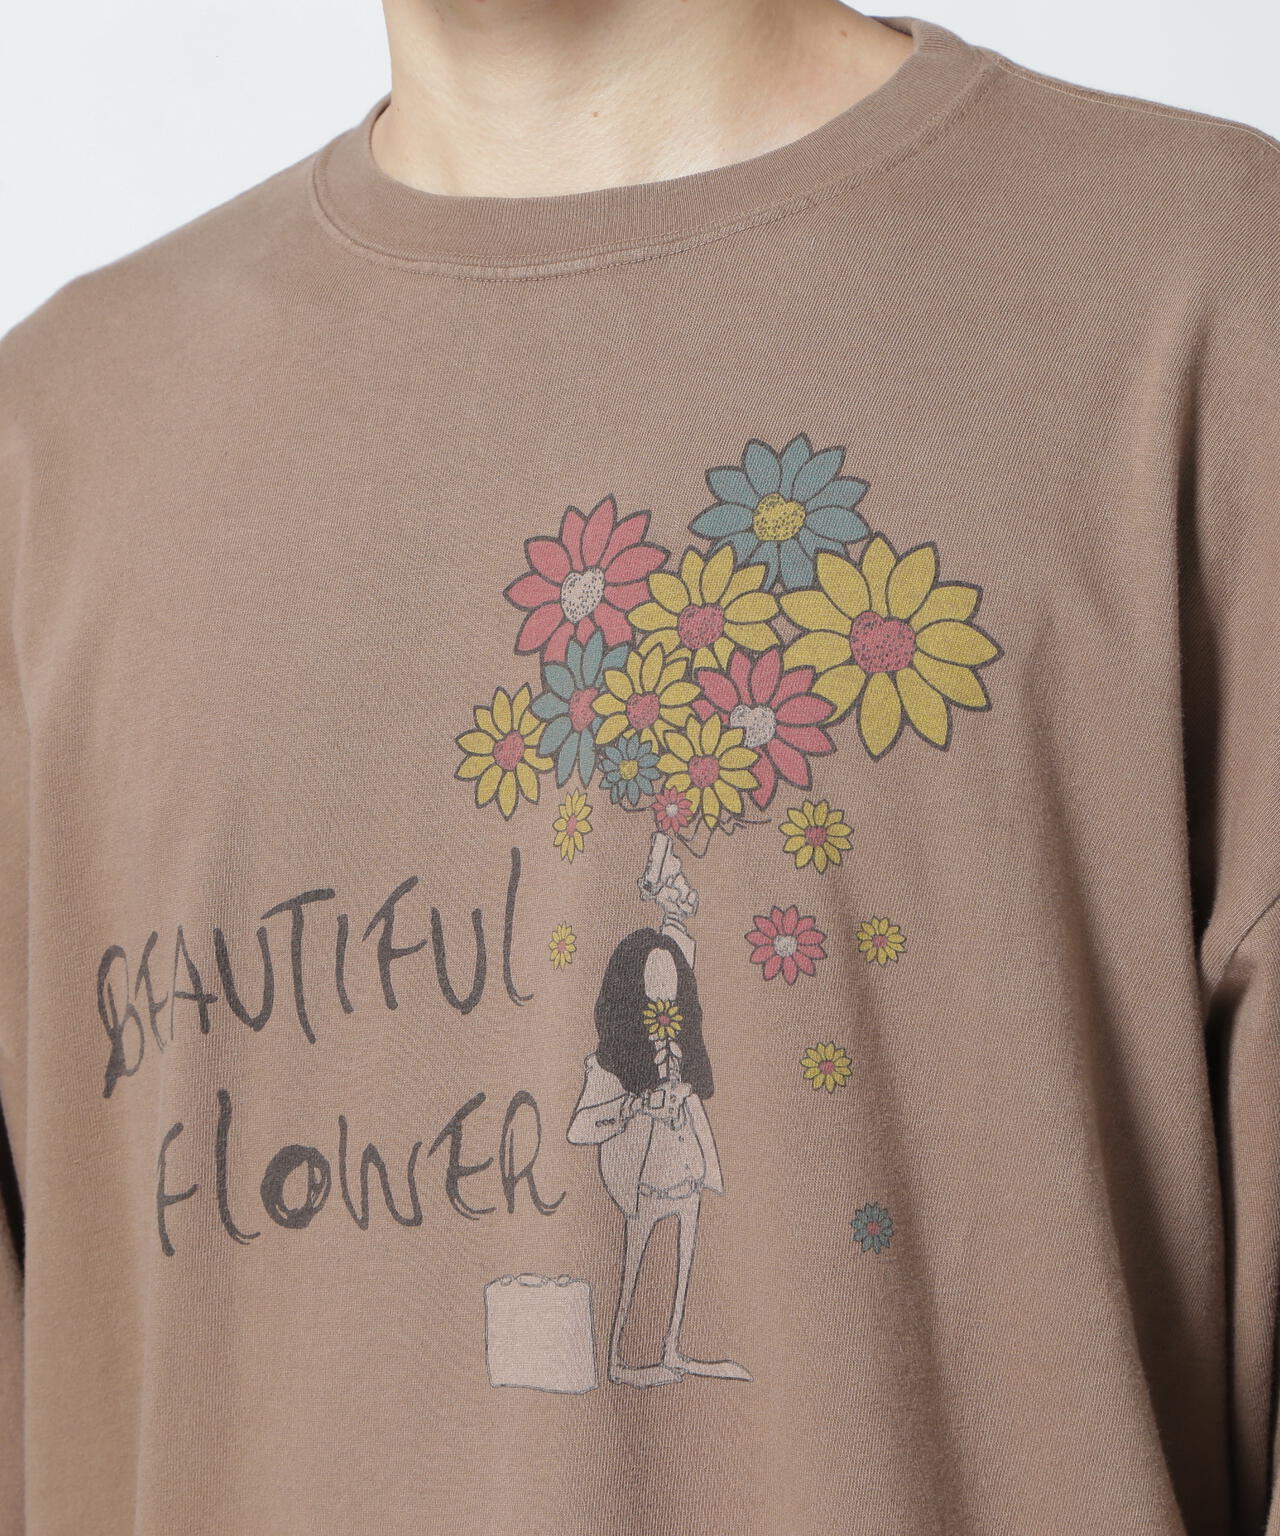 REMI RELIEF/別注beautifull flower LS T-shirt | B'2nd ( ビー